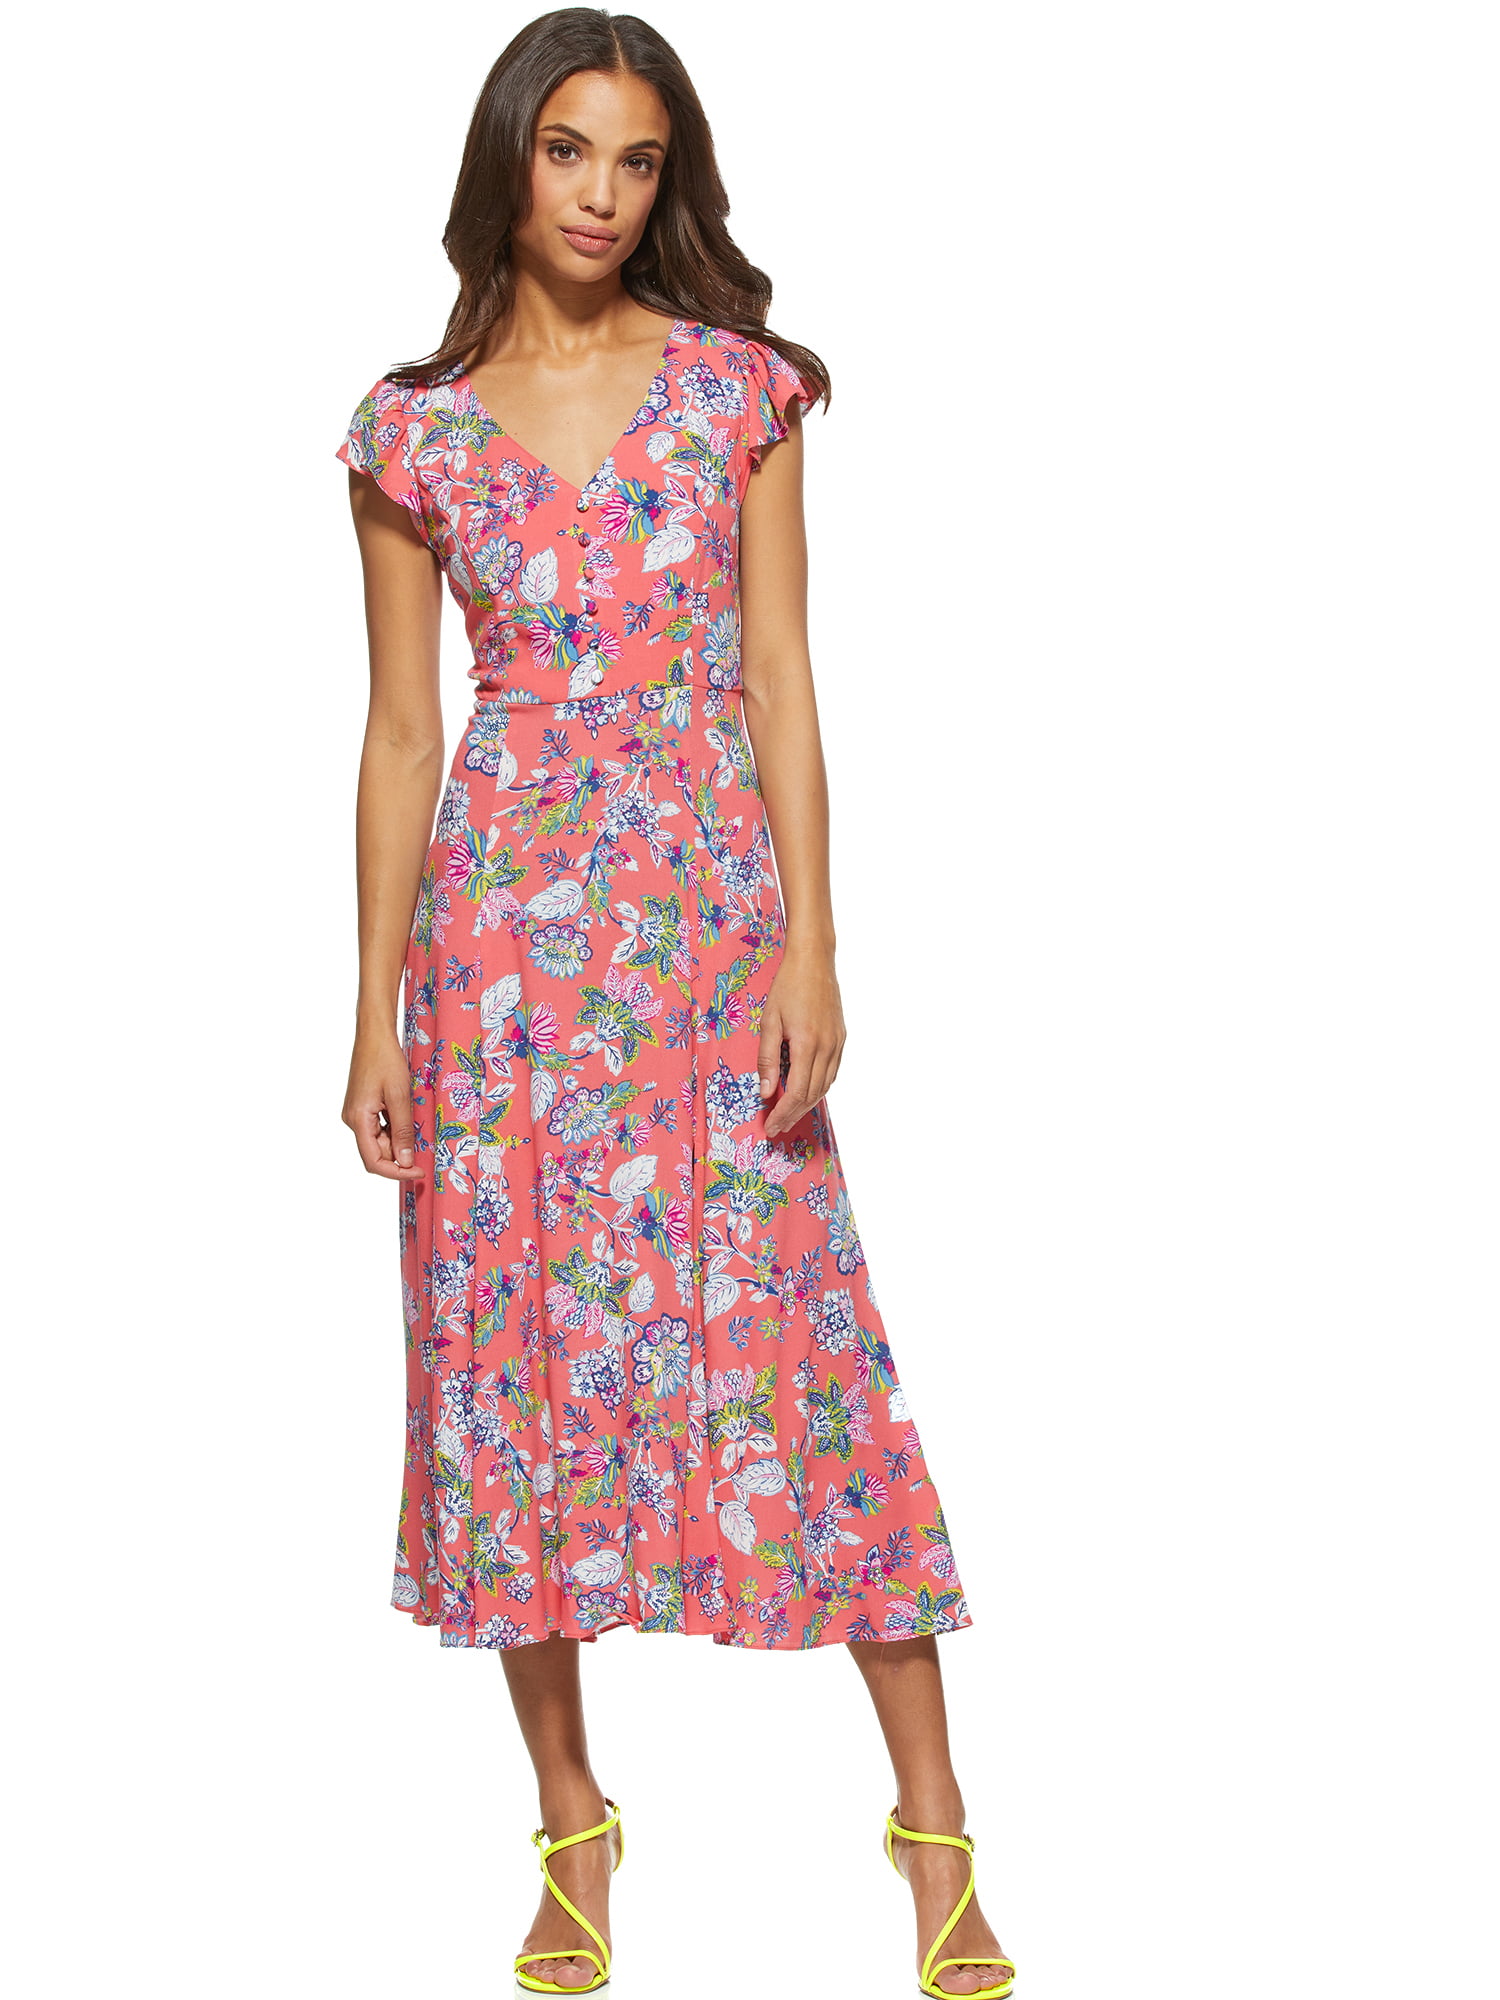 Scoop Women’s Midi Dress with Keyhole Back - Walmart.com